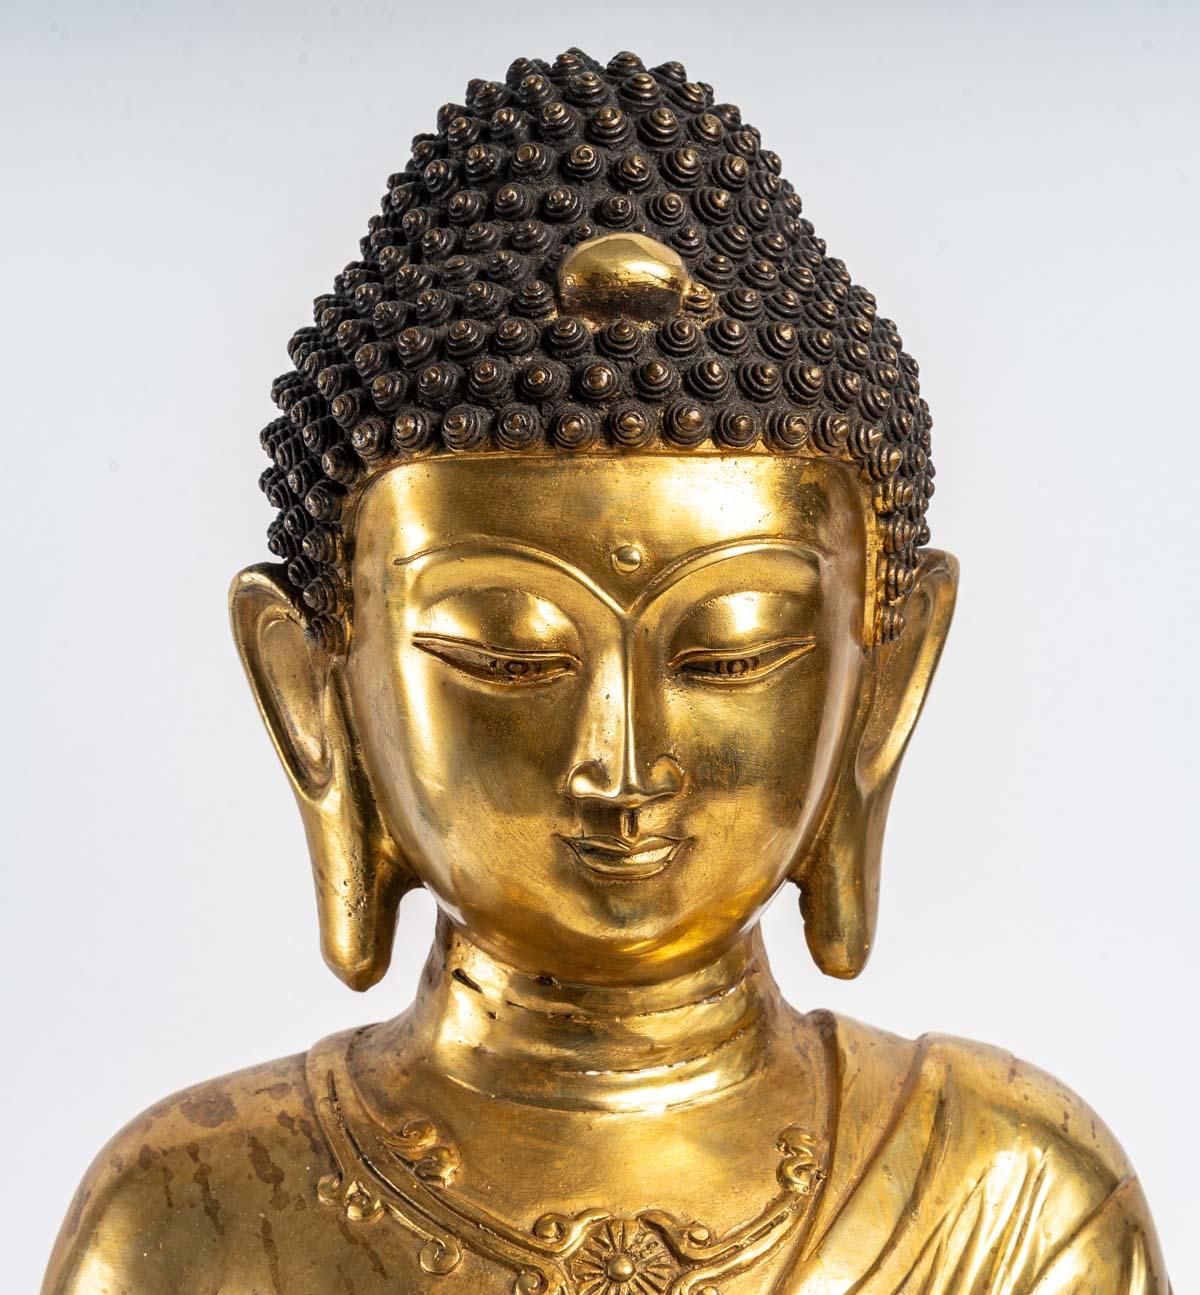 Chinese Large Seated Buddha on a Stylized Lotus Base